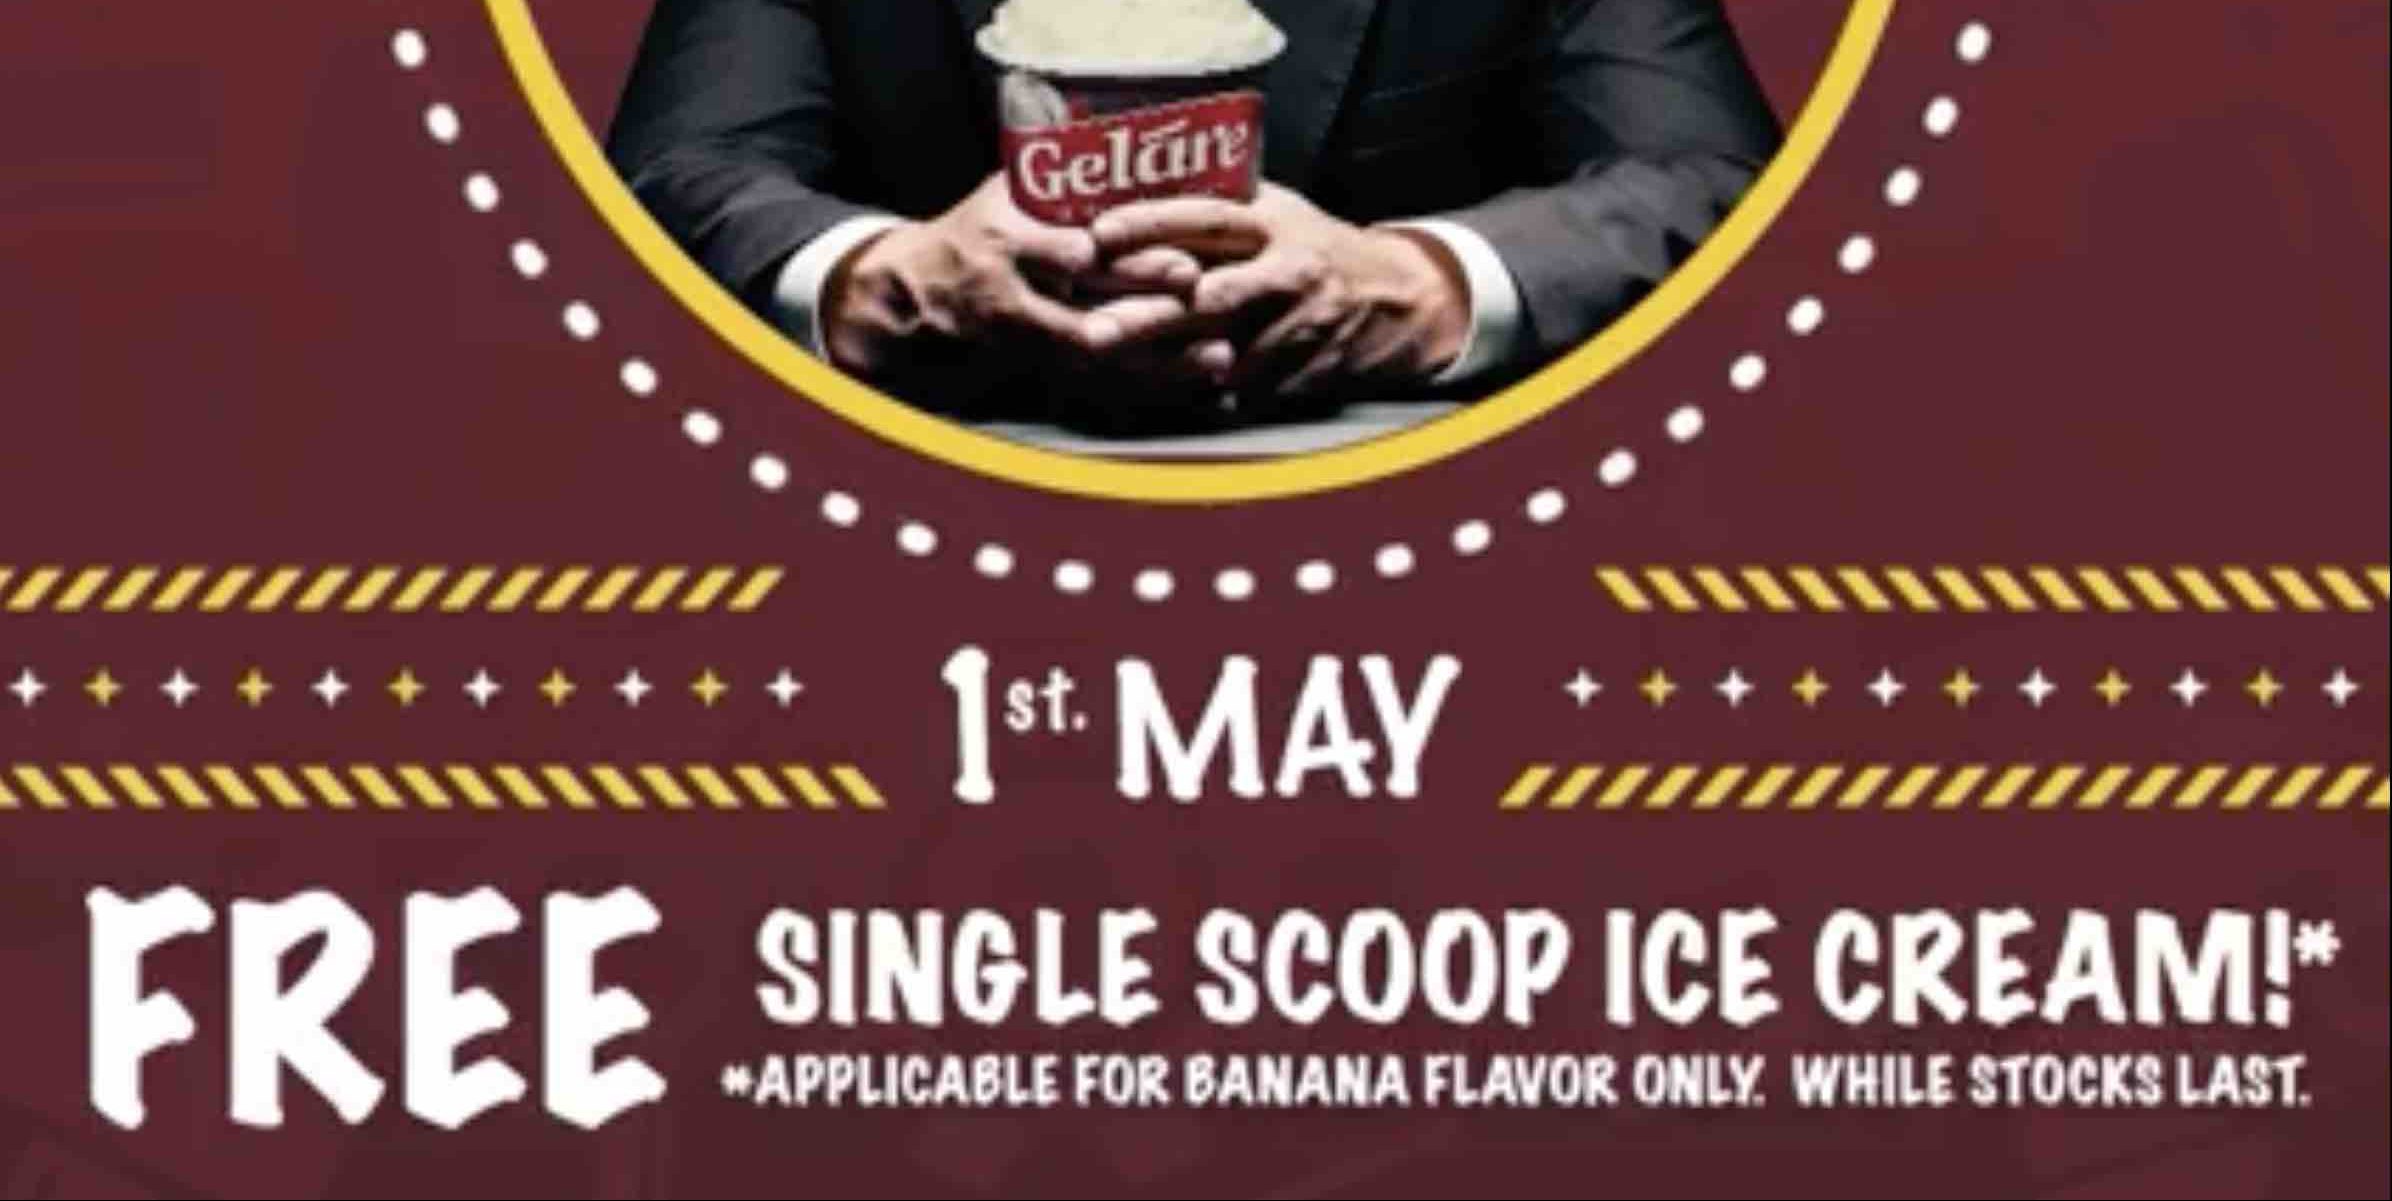 Geláre Singapore FREE Single Scoop of Banana Ice Cream Promotion 1 May 2017